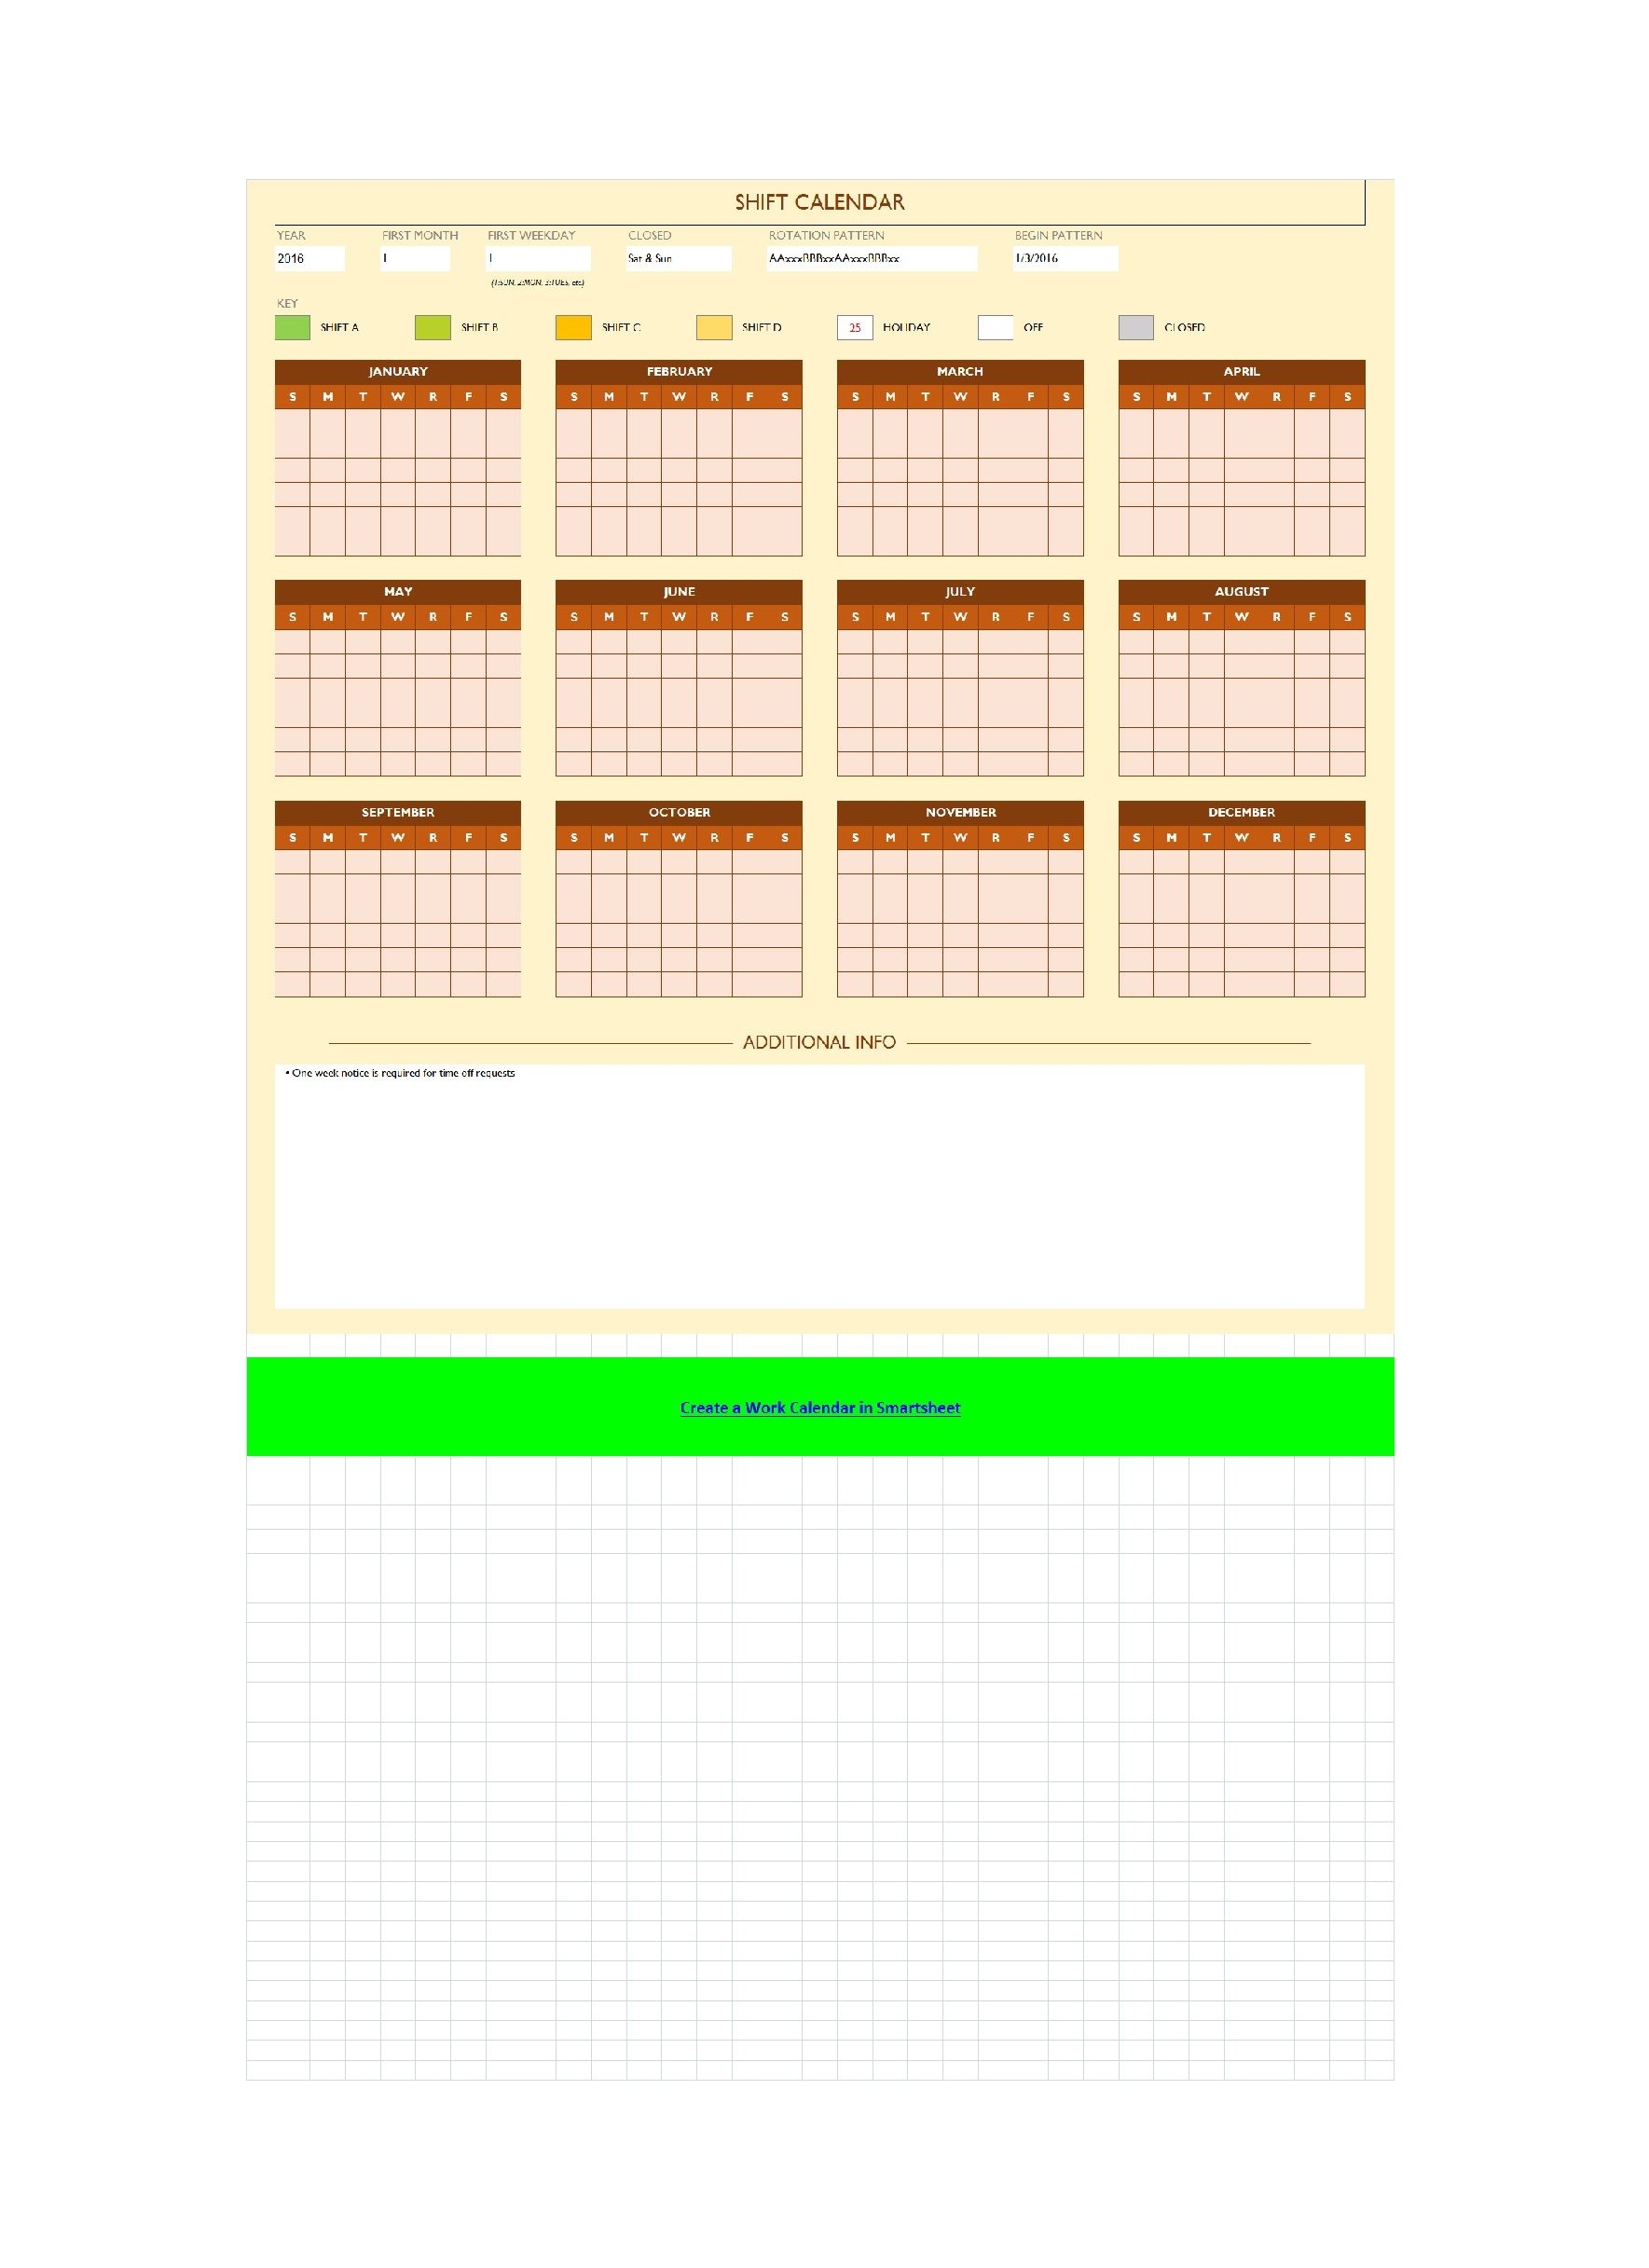 How to On Call Rotation Calendar Template | Get Your Calendar Printable